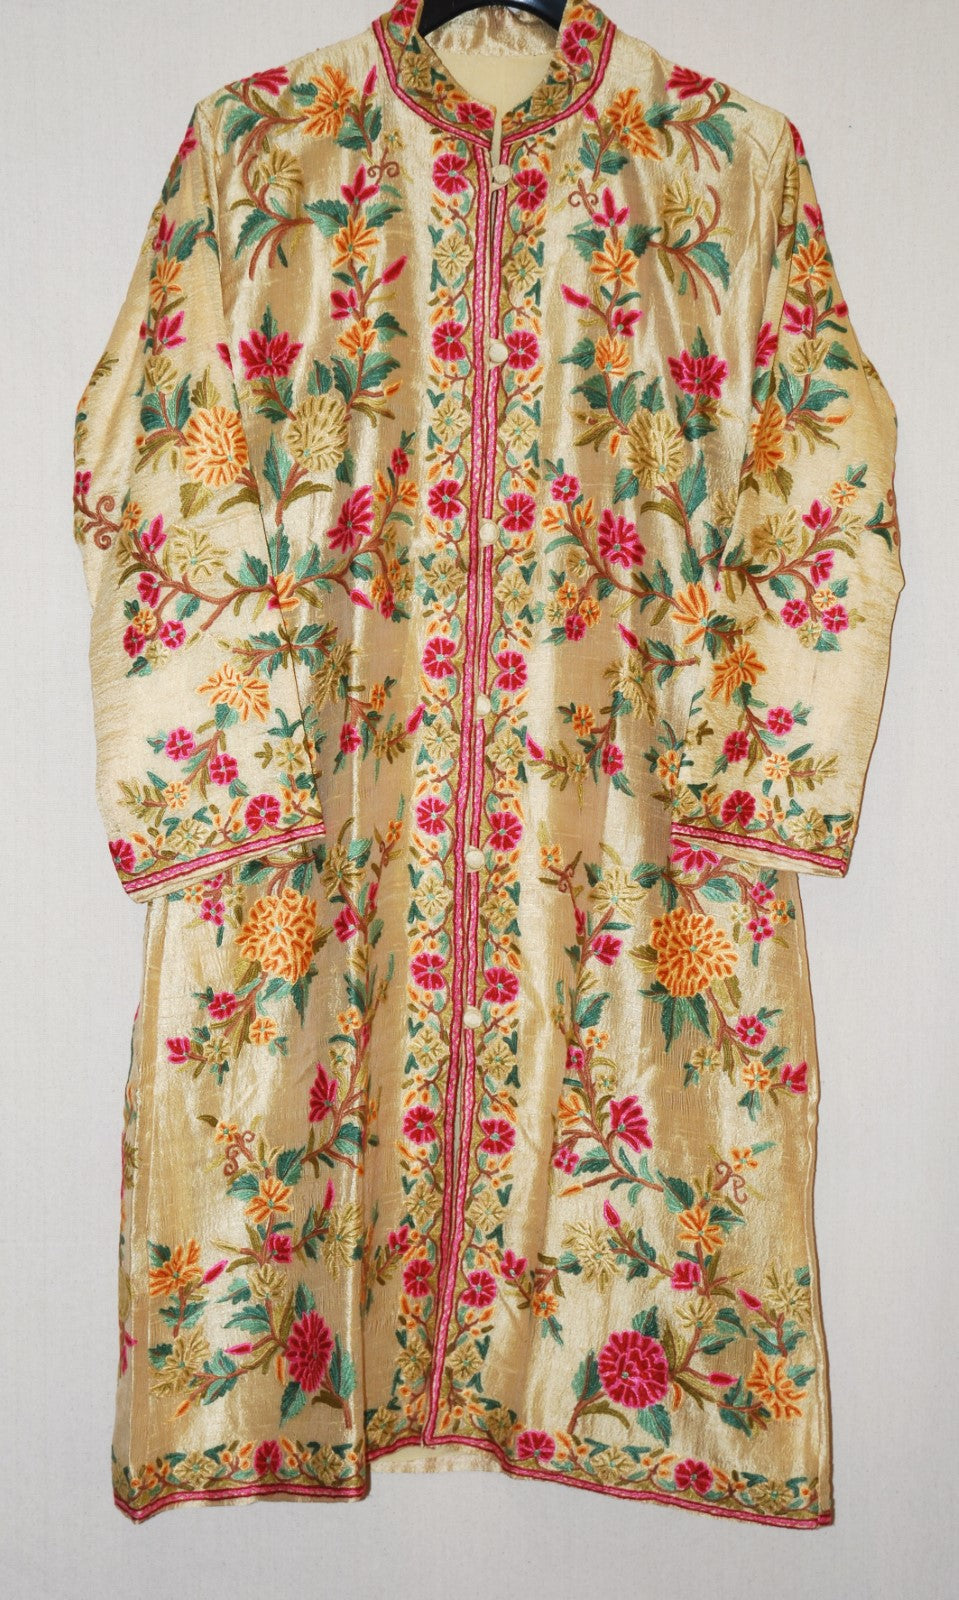 Kashmir Ethnic Silk Coat Long Jacket Gold, Multicolor Embroidery #AO-302